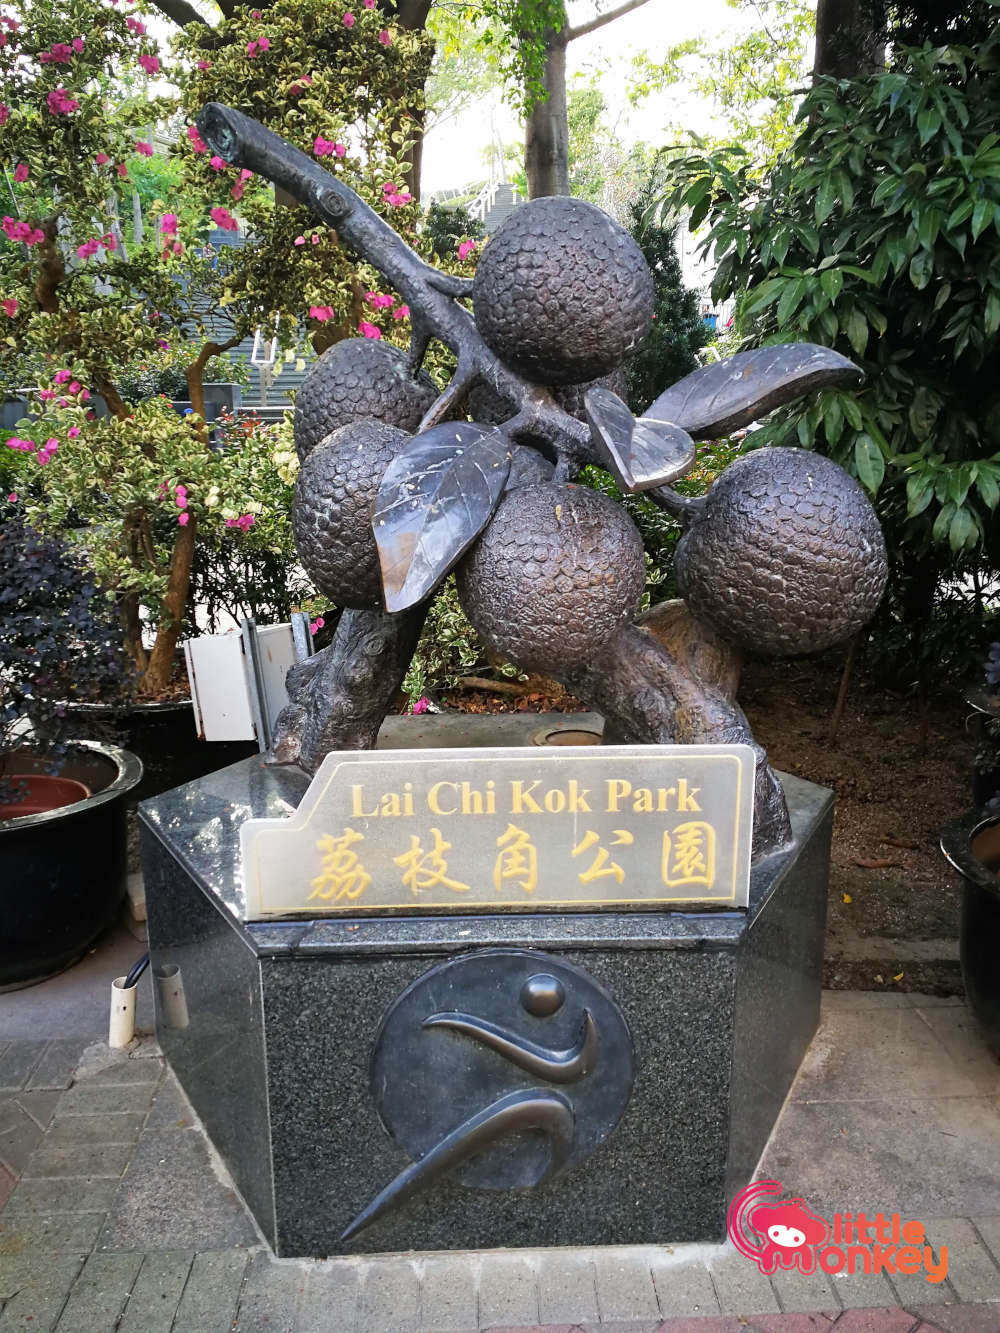 Lai Chi Kok Park's lychee statue at entrance